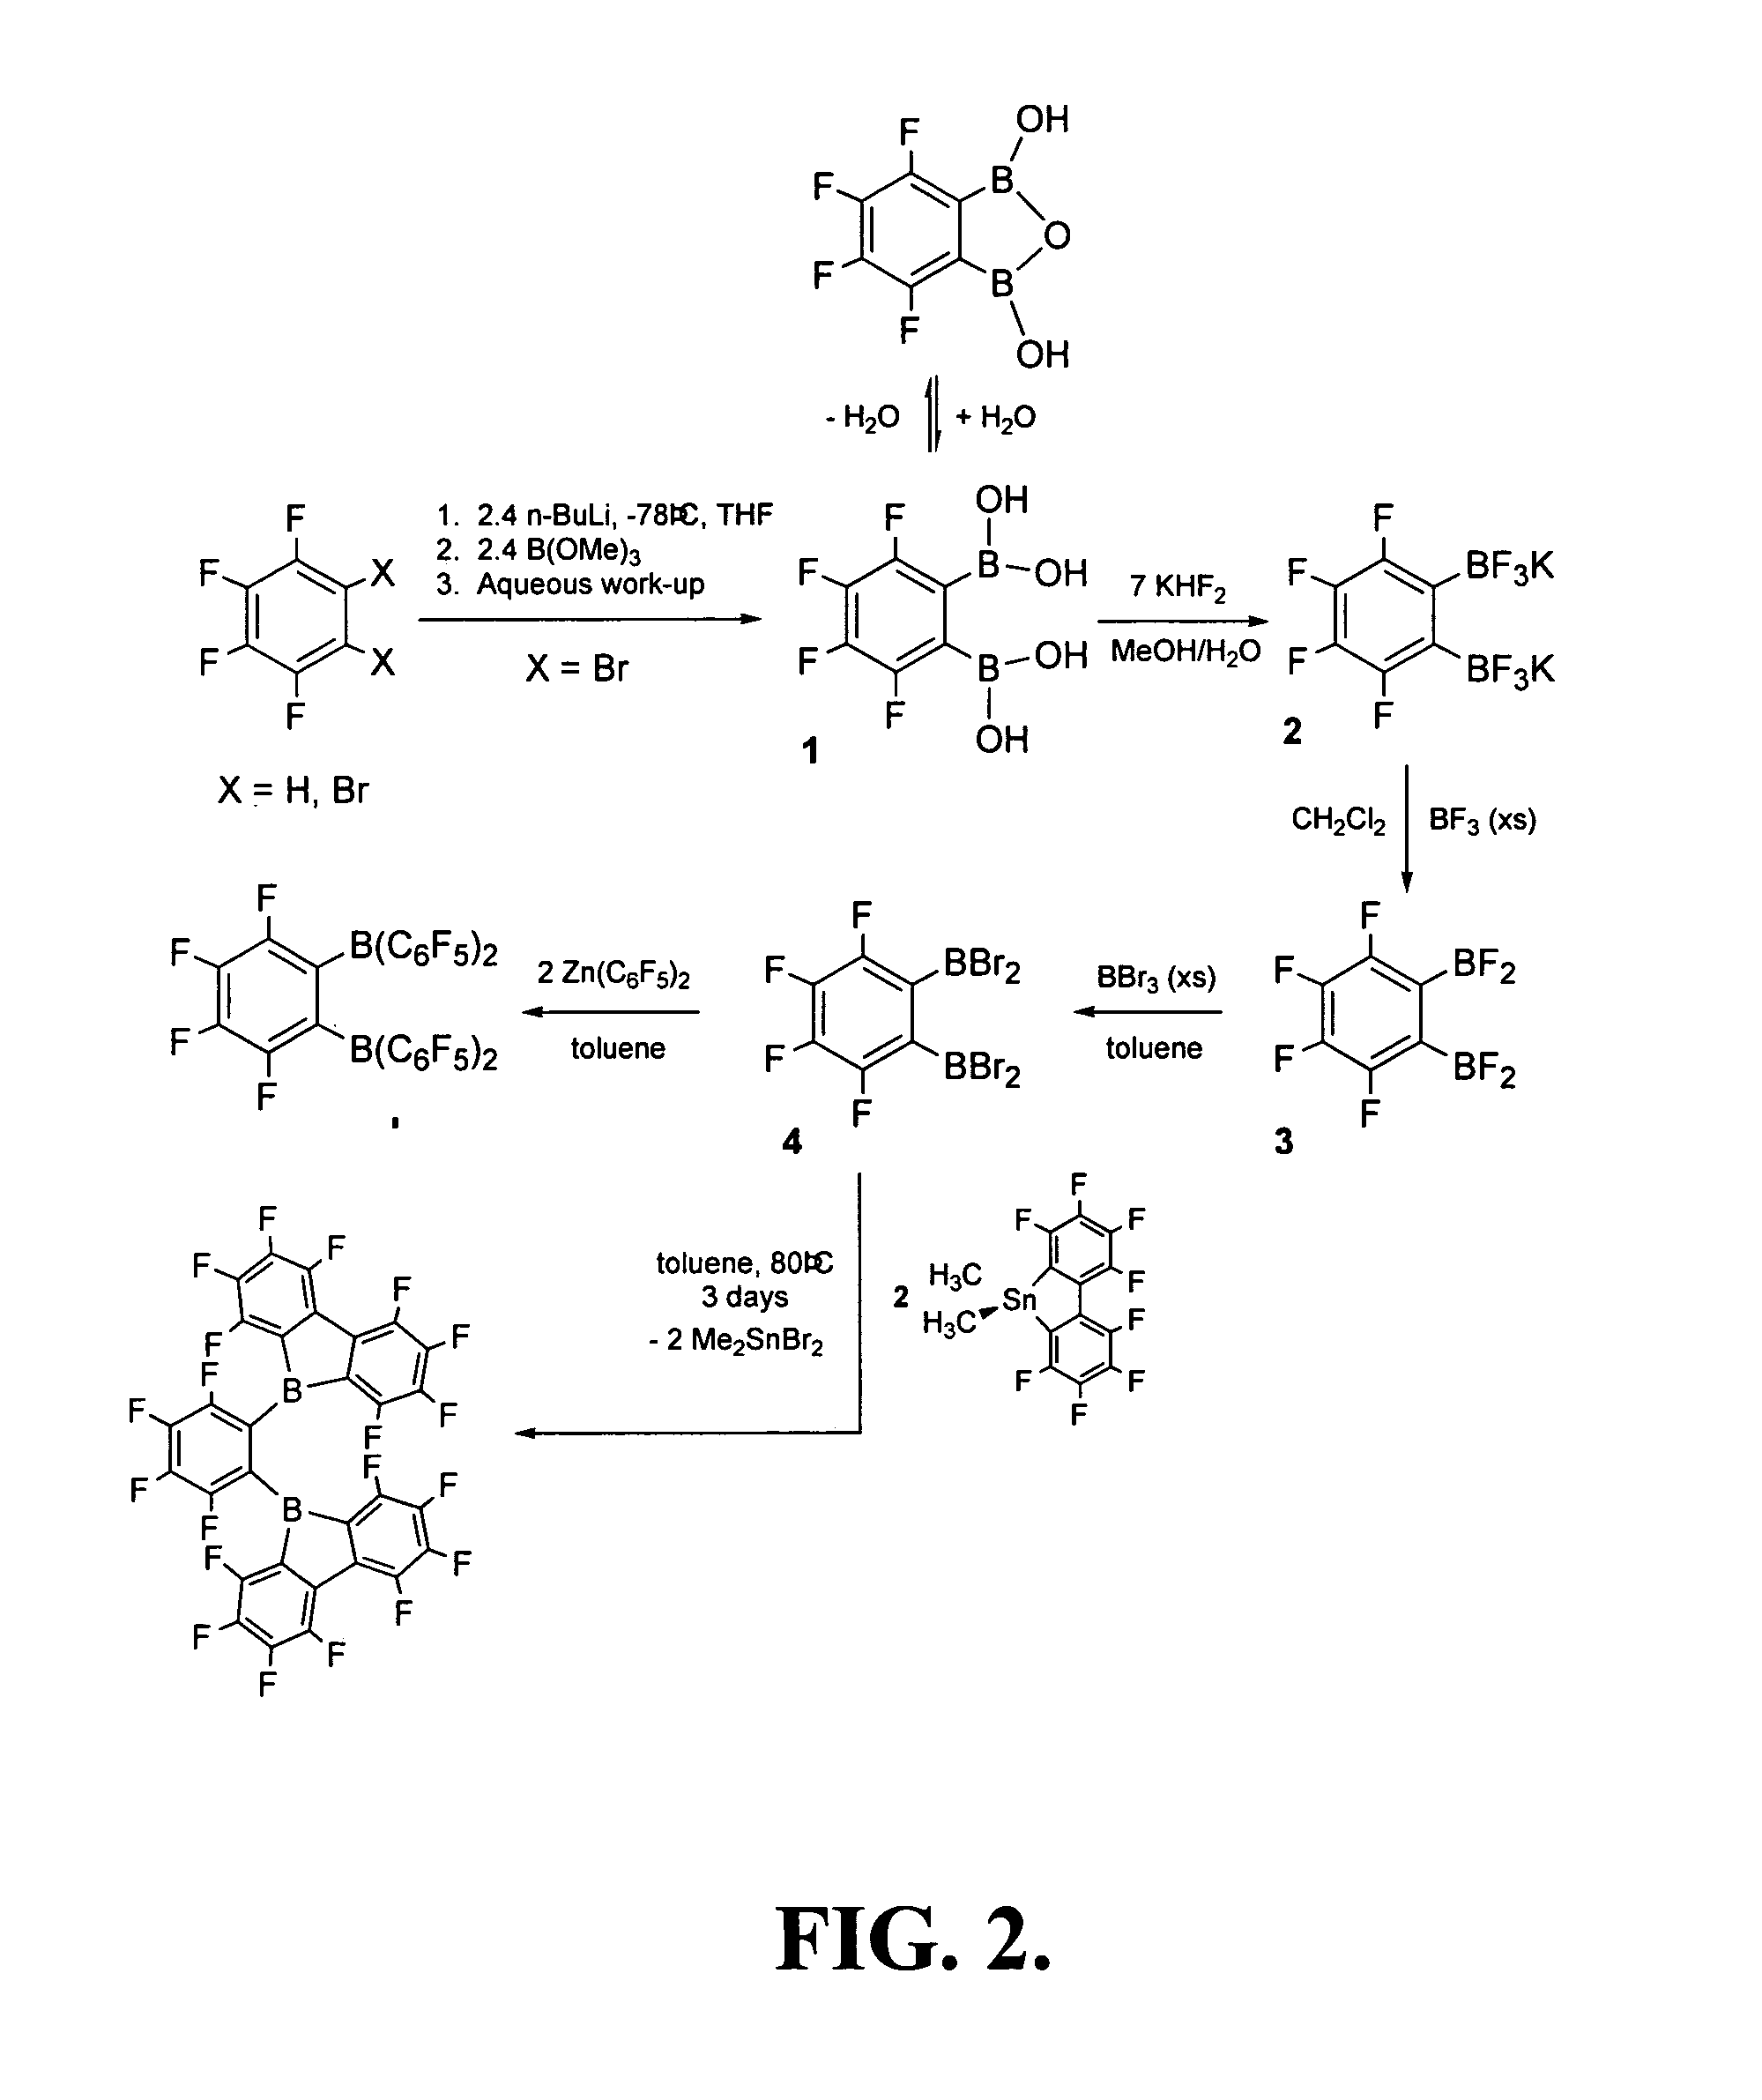 1,2-bis(9-bora-1,2,3,4,5,6,7,8-octafluorofluorenyl)-3,4,5,6-tetraflurobenzene and related compounds and methods